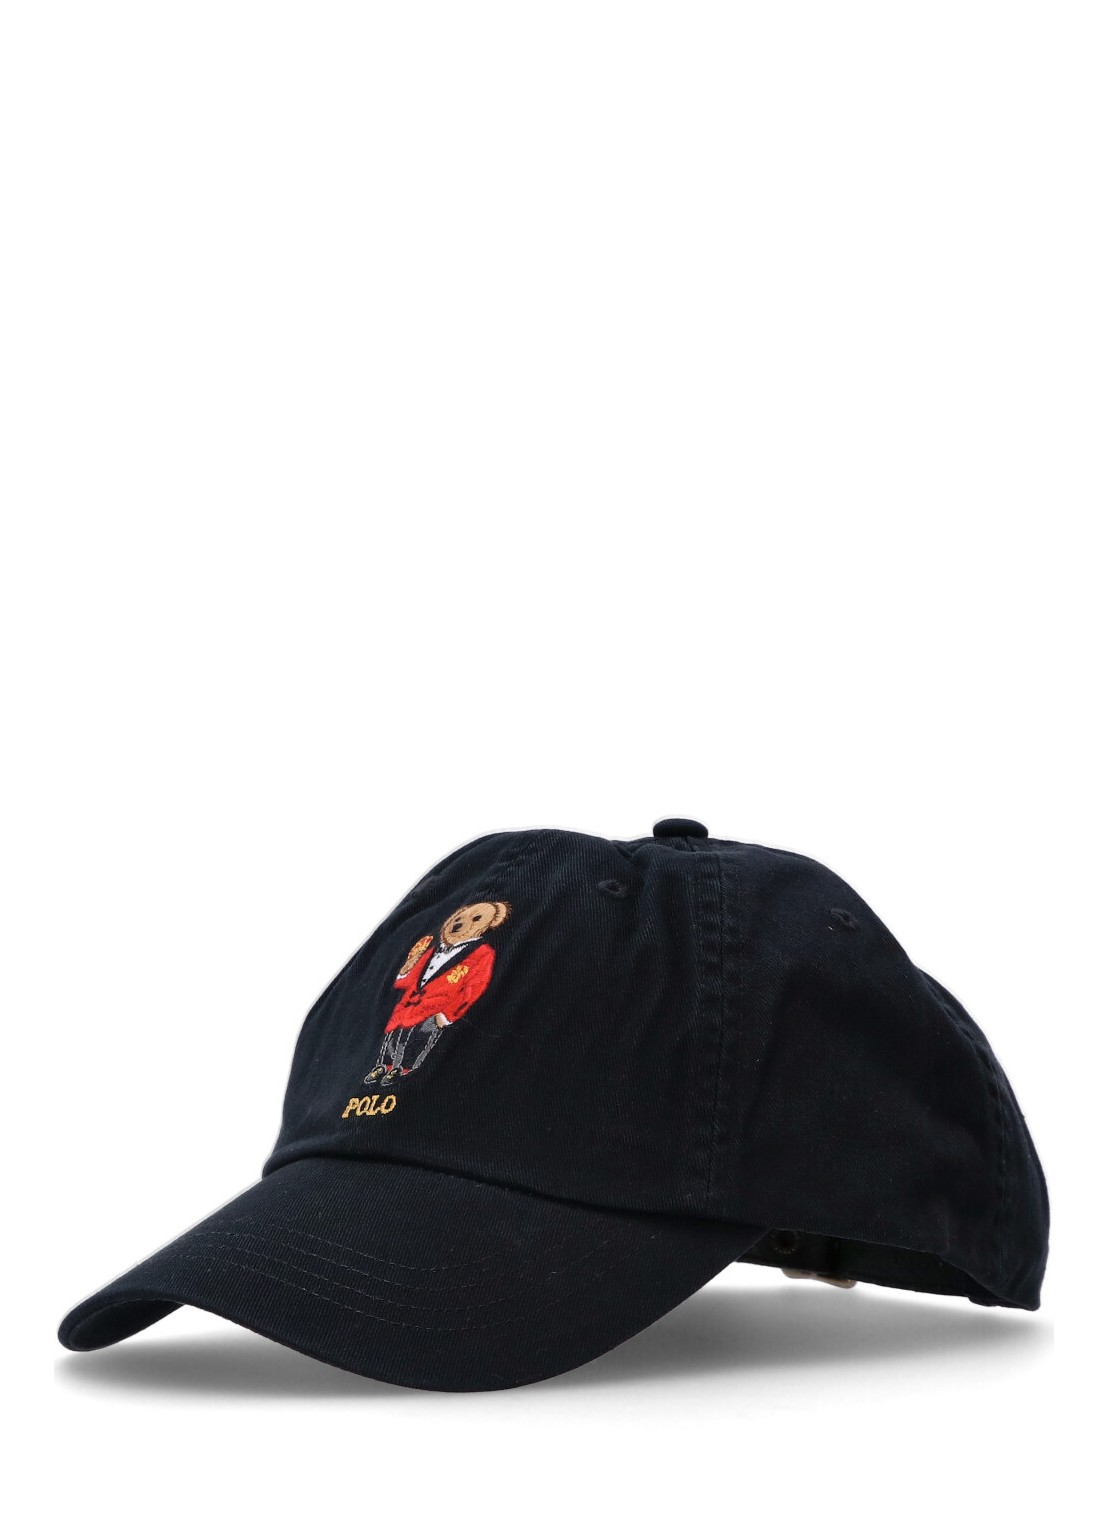 Gorras polo ralph lauren cap man lnybearcap-cap-hat 710926923001 polo black talla negro
 